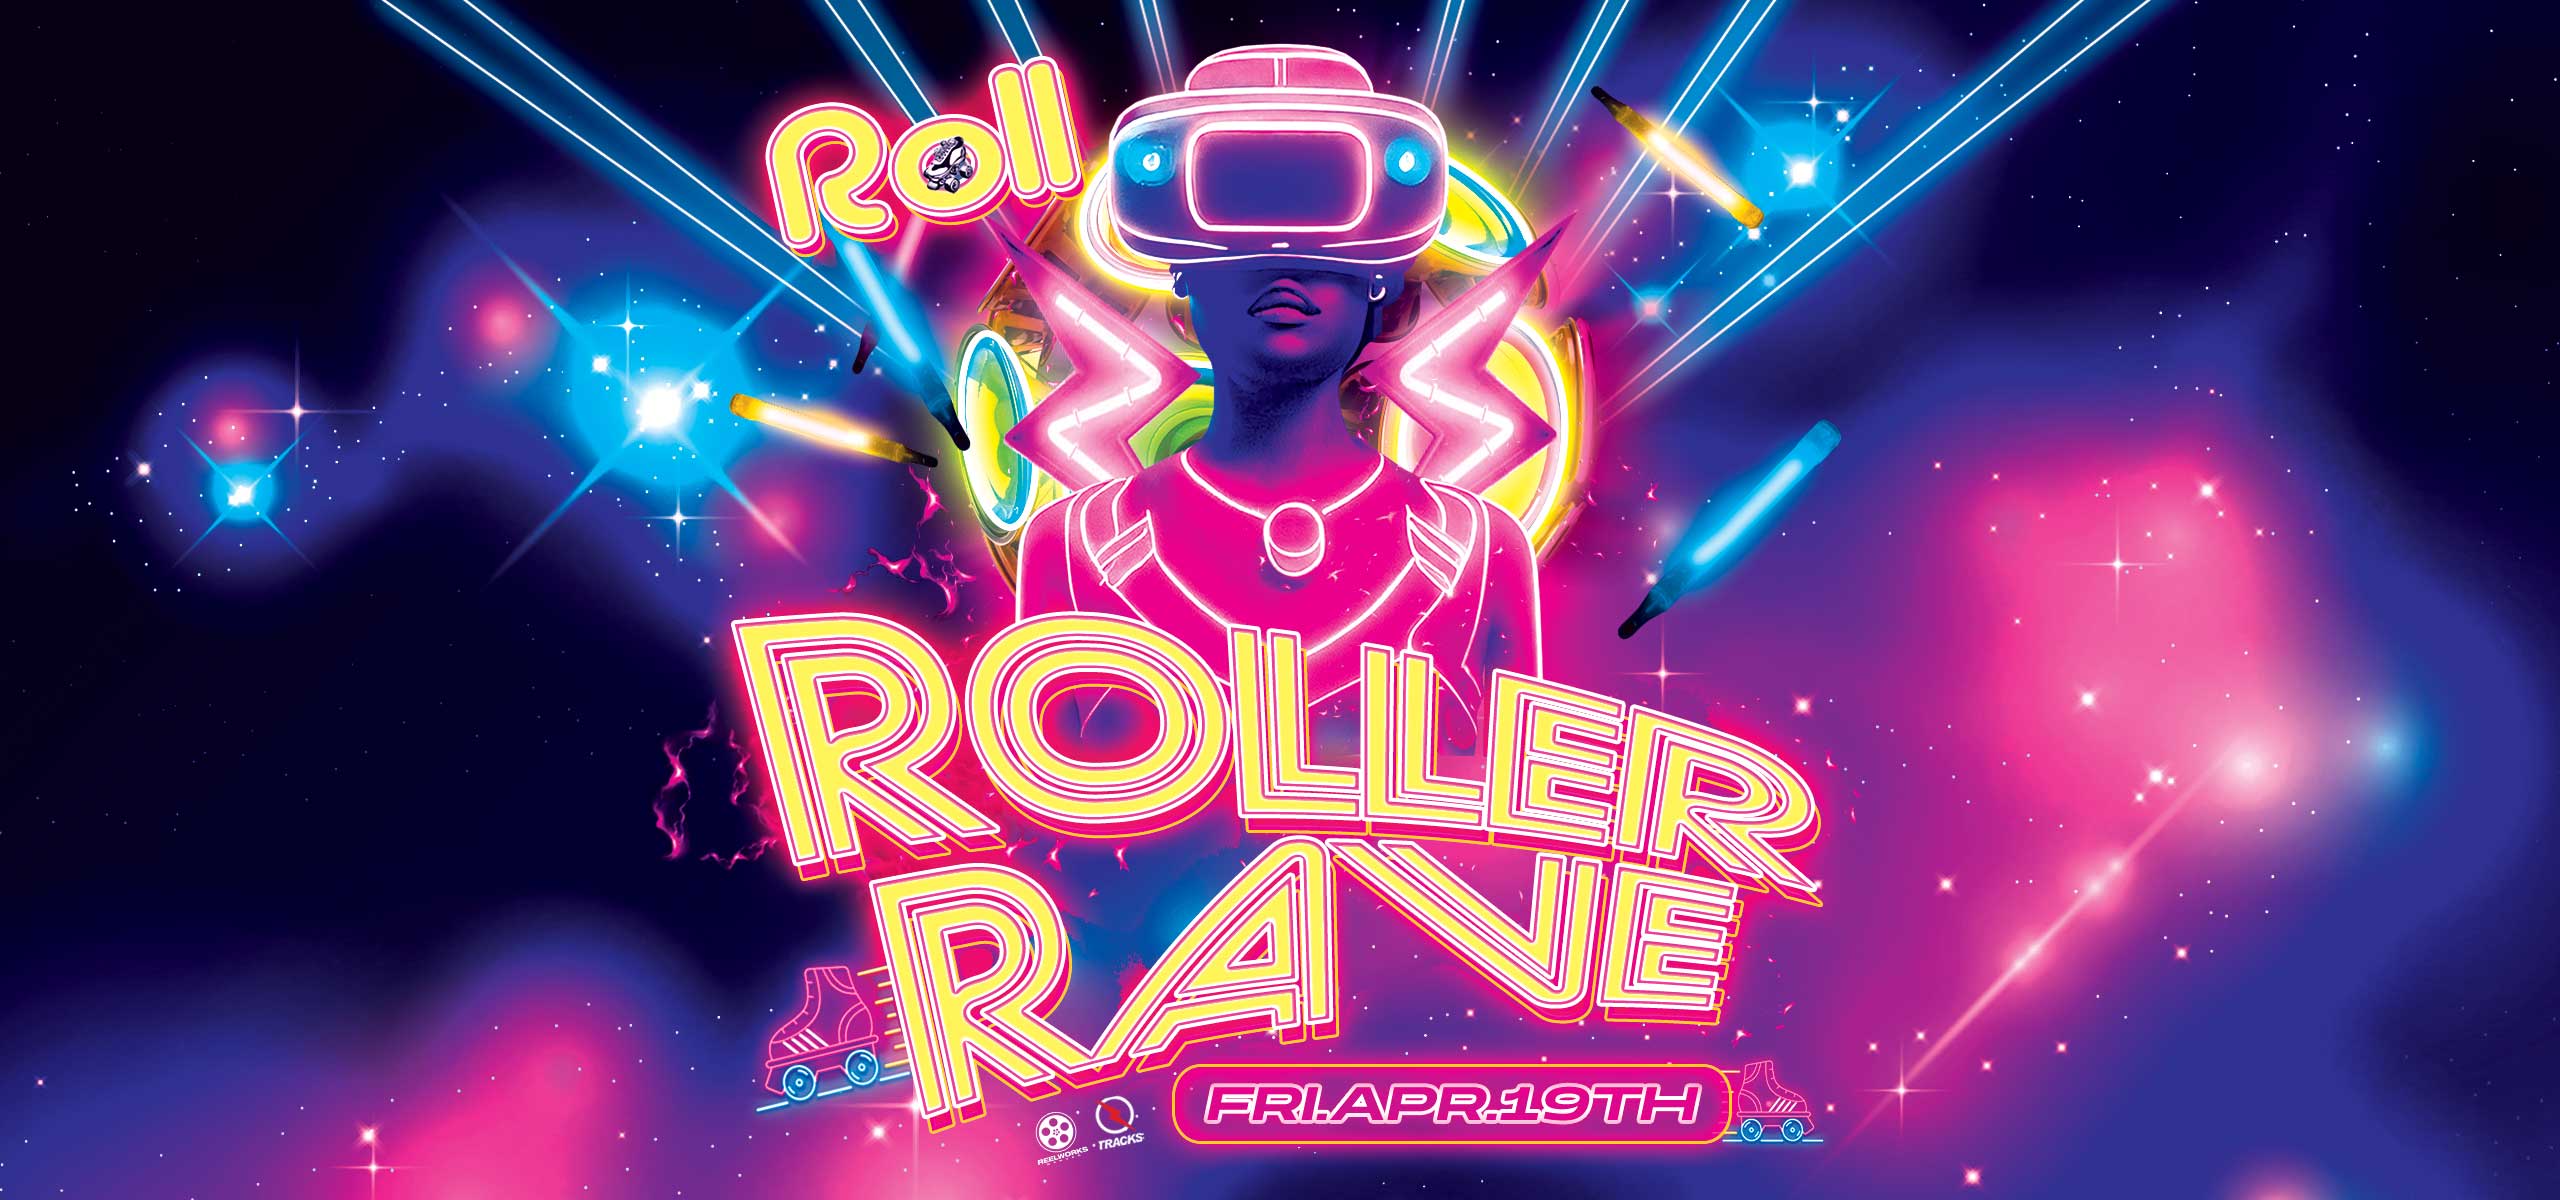 ROLL: Roller Rave